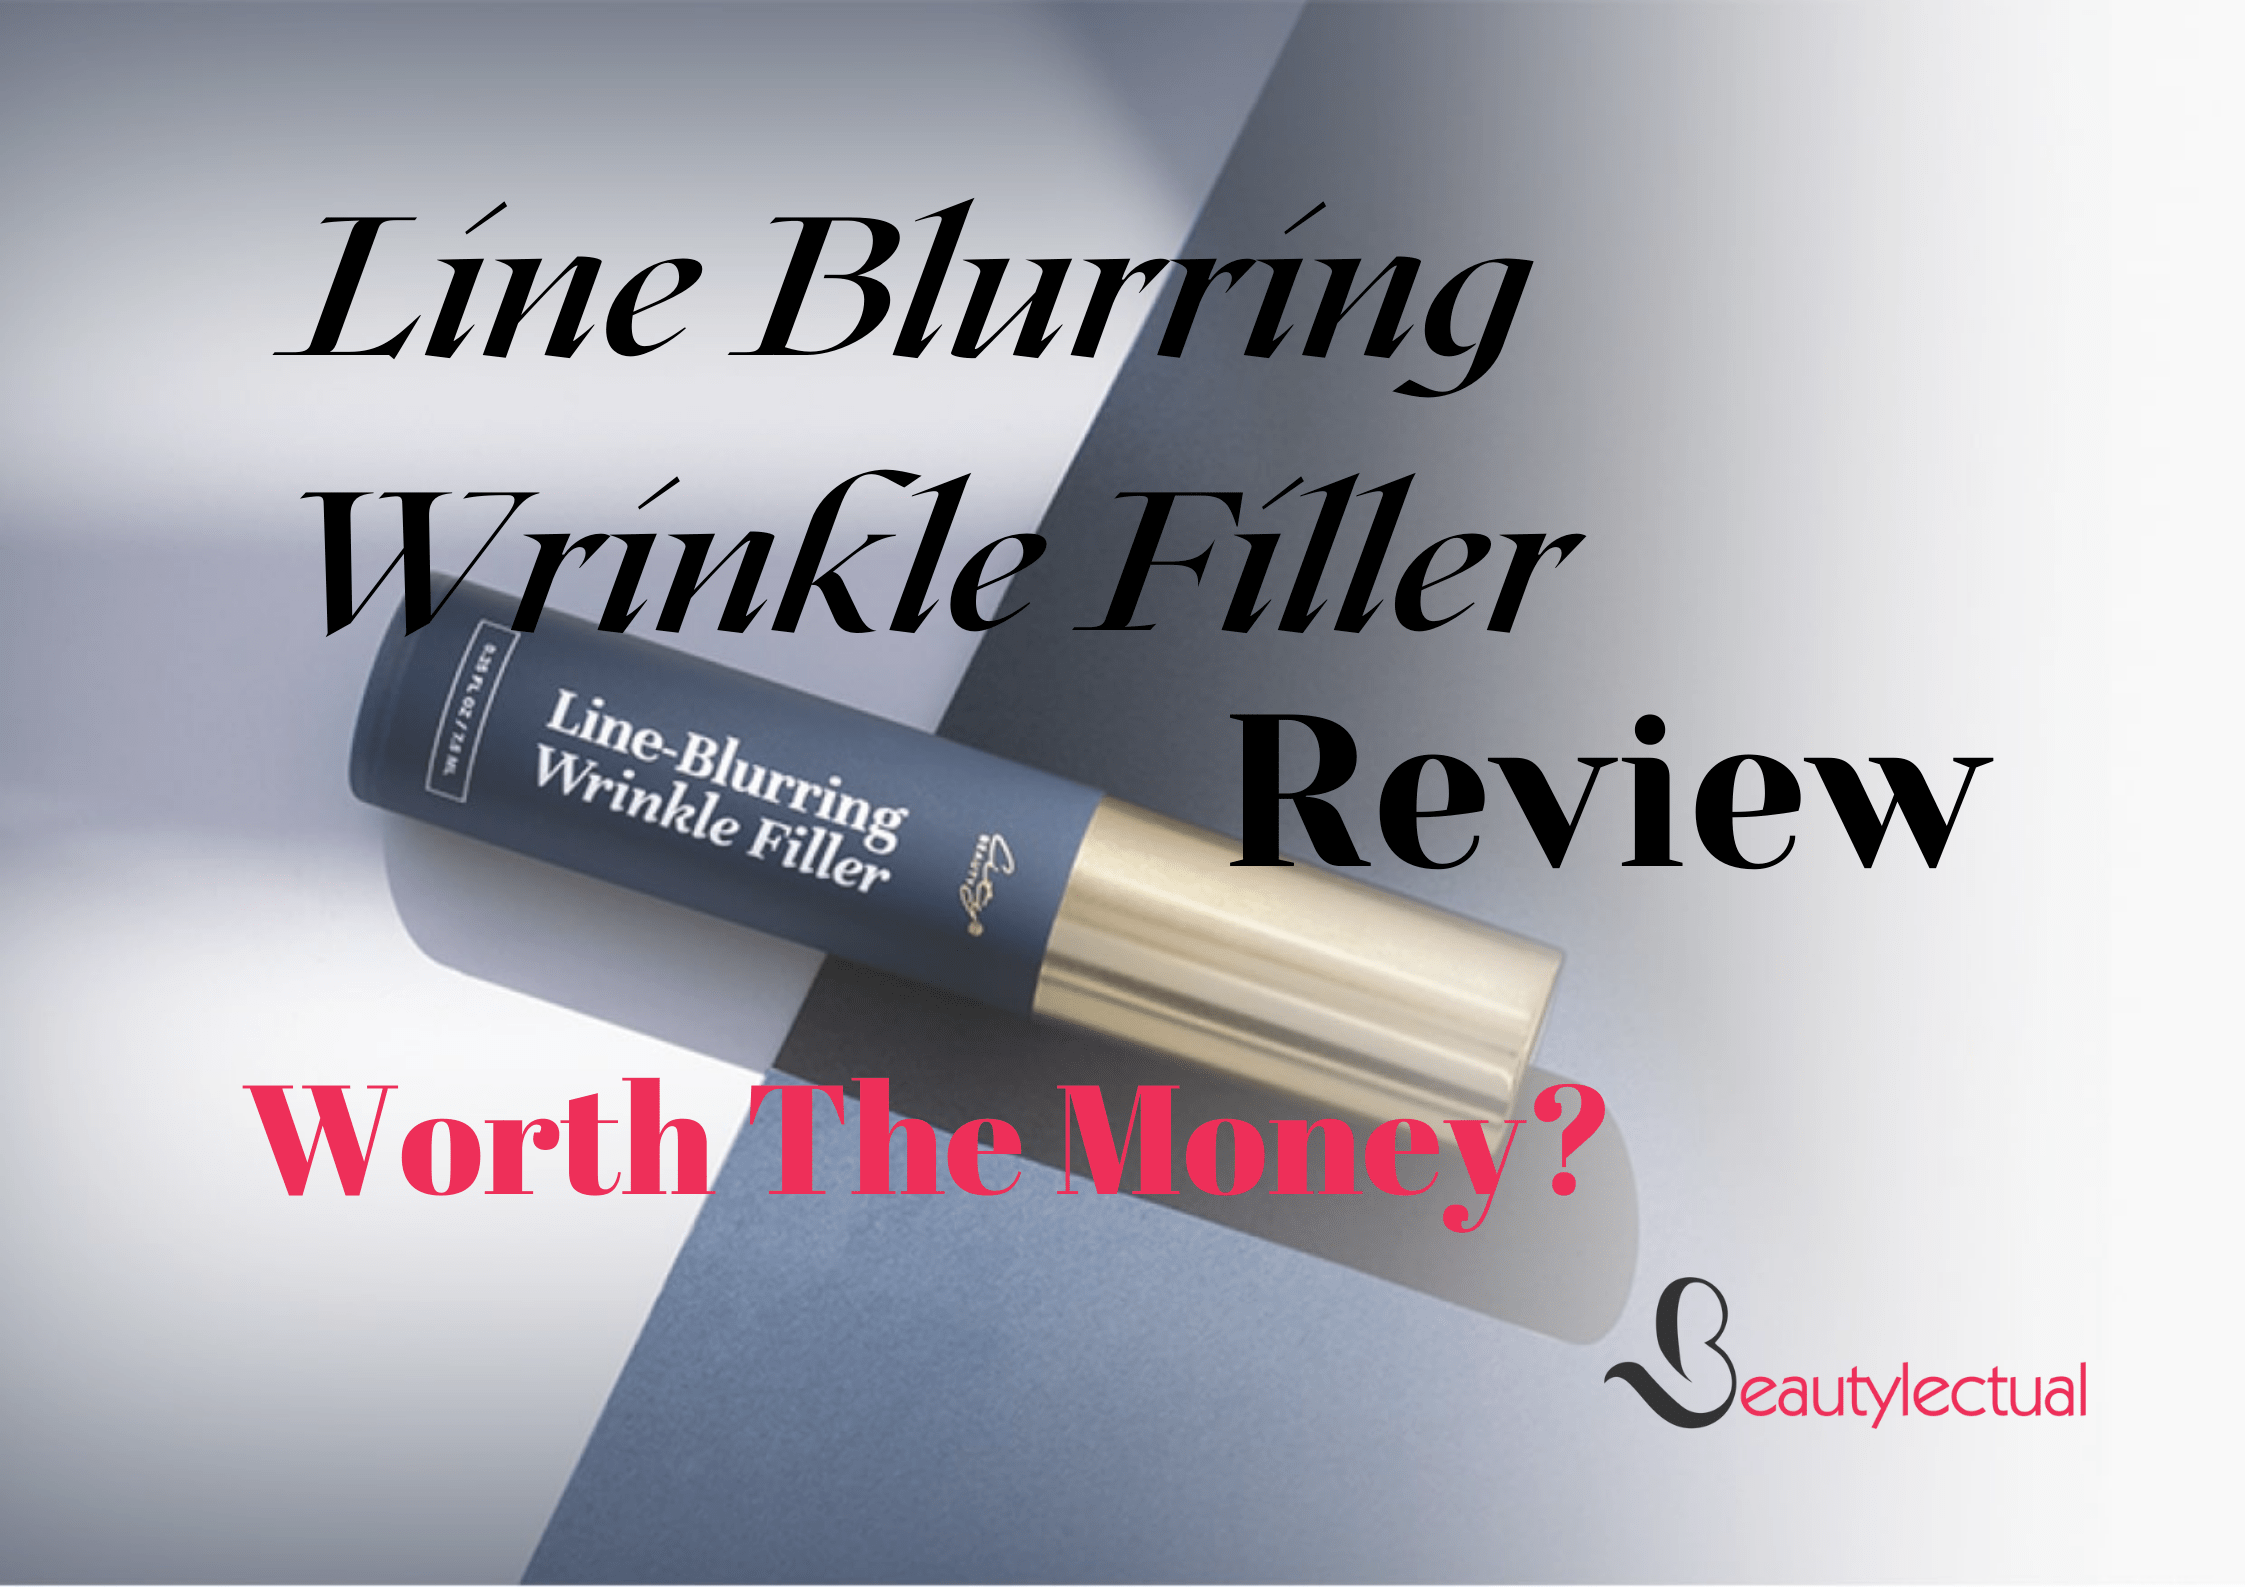 Line Blurring Wrinkle Filler Reviews